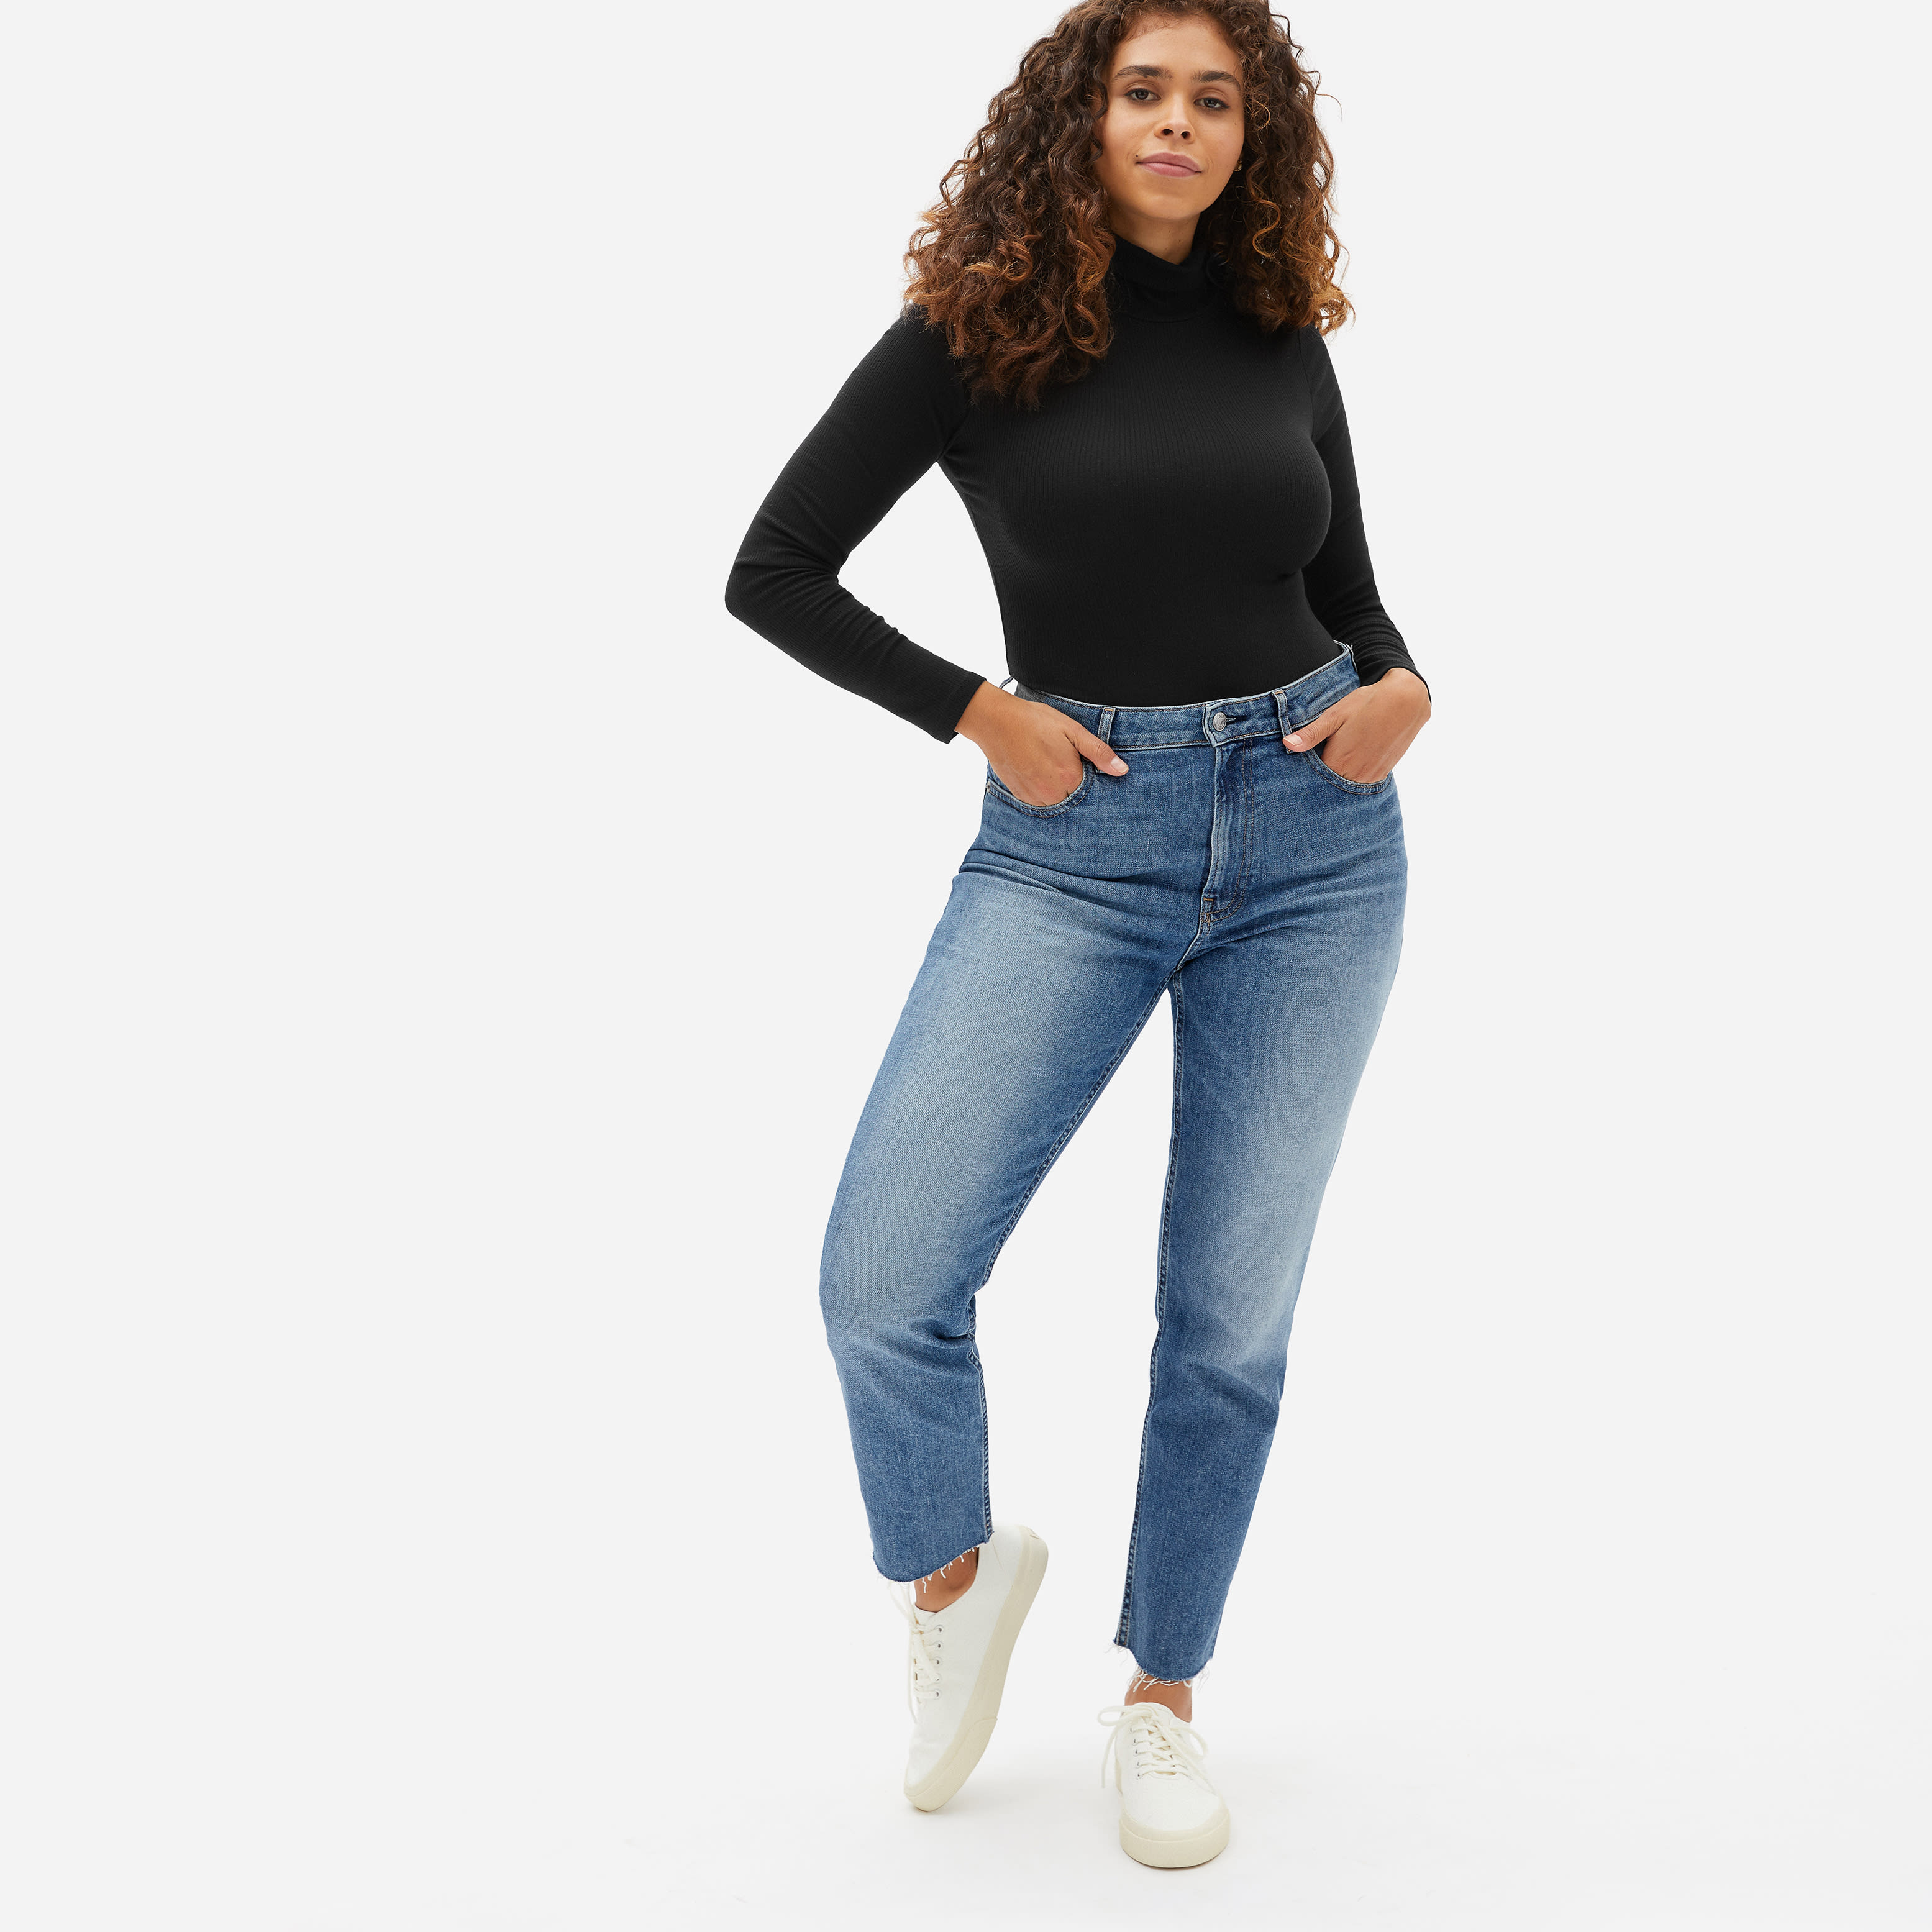 everlane jeans women's